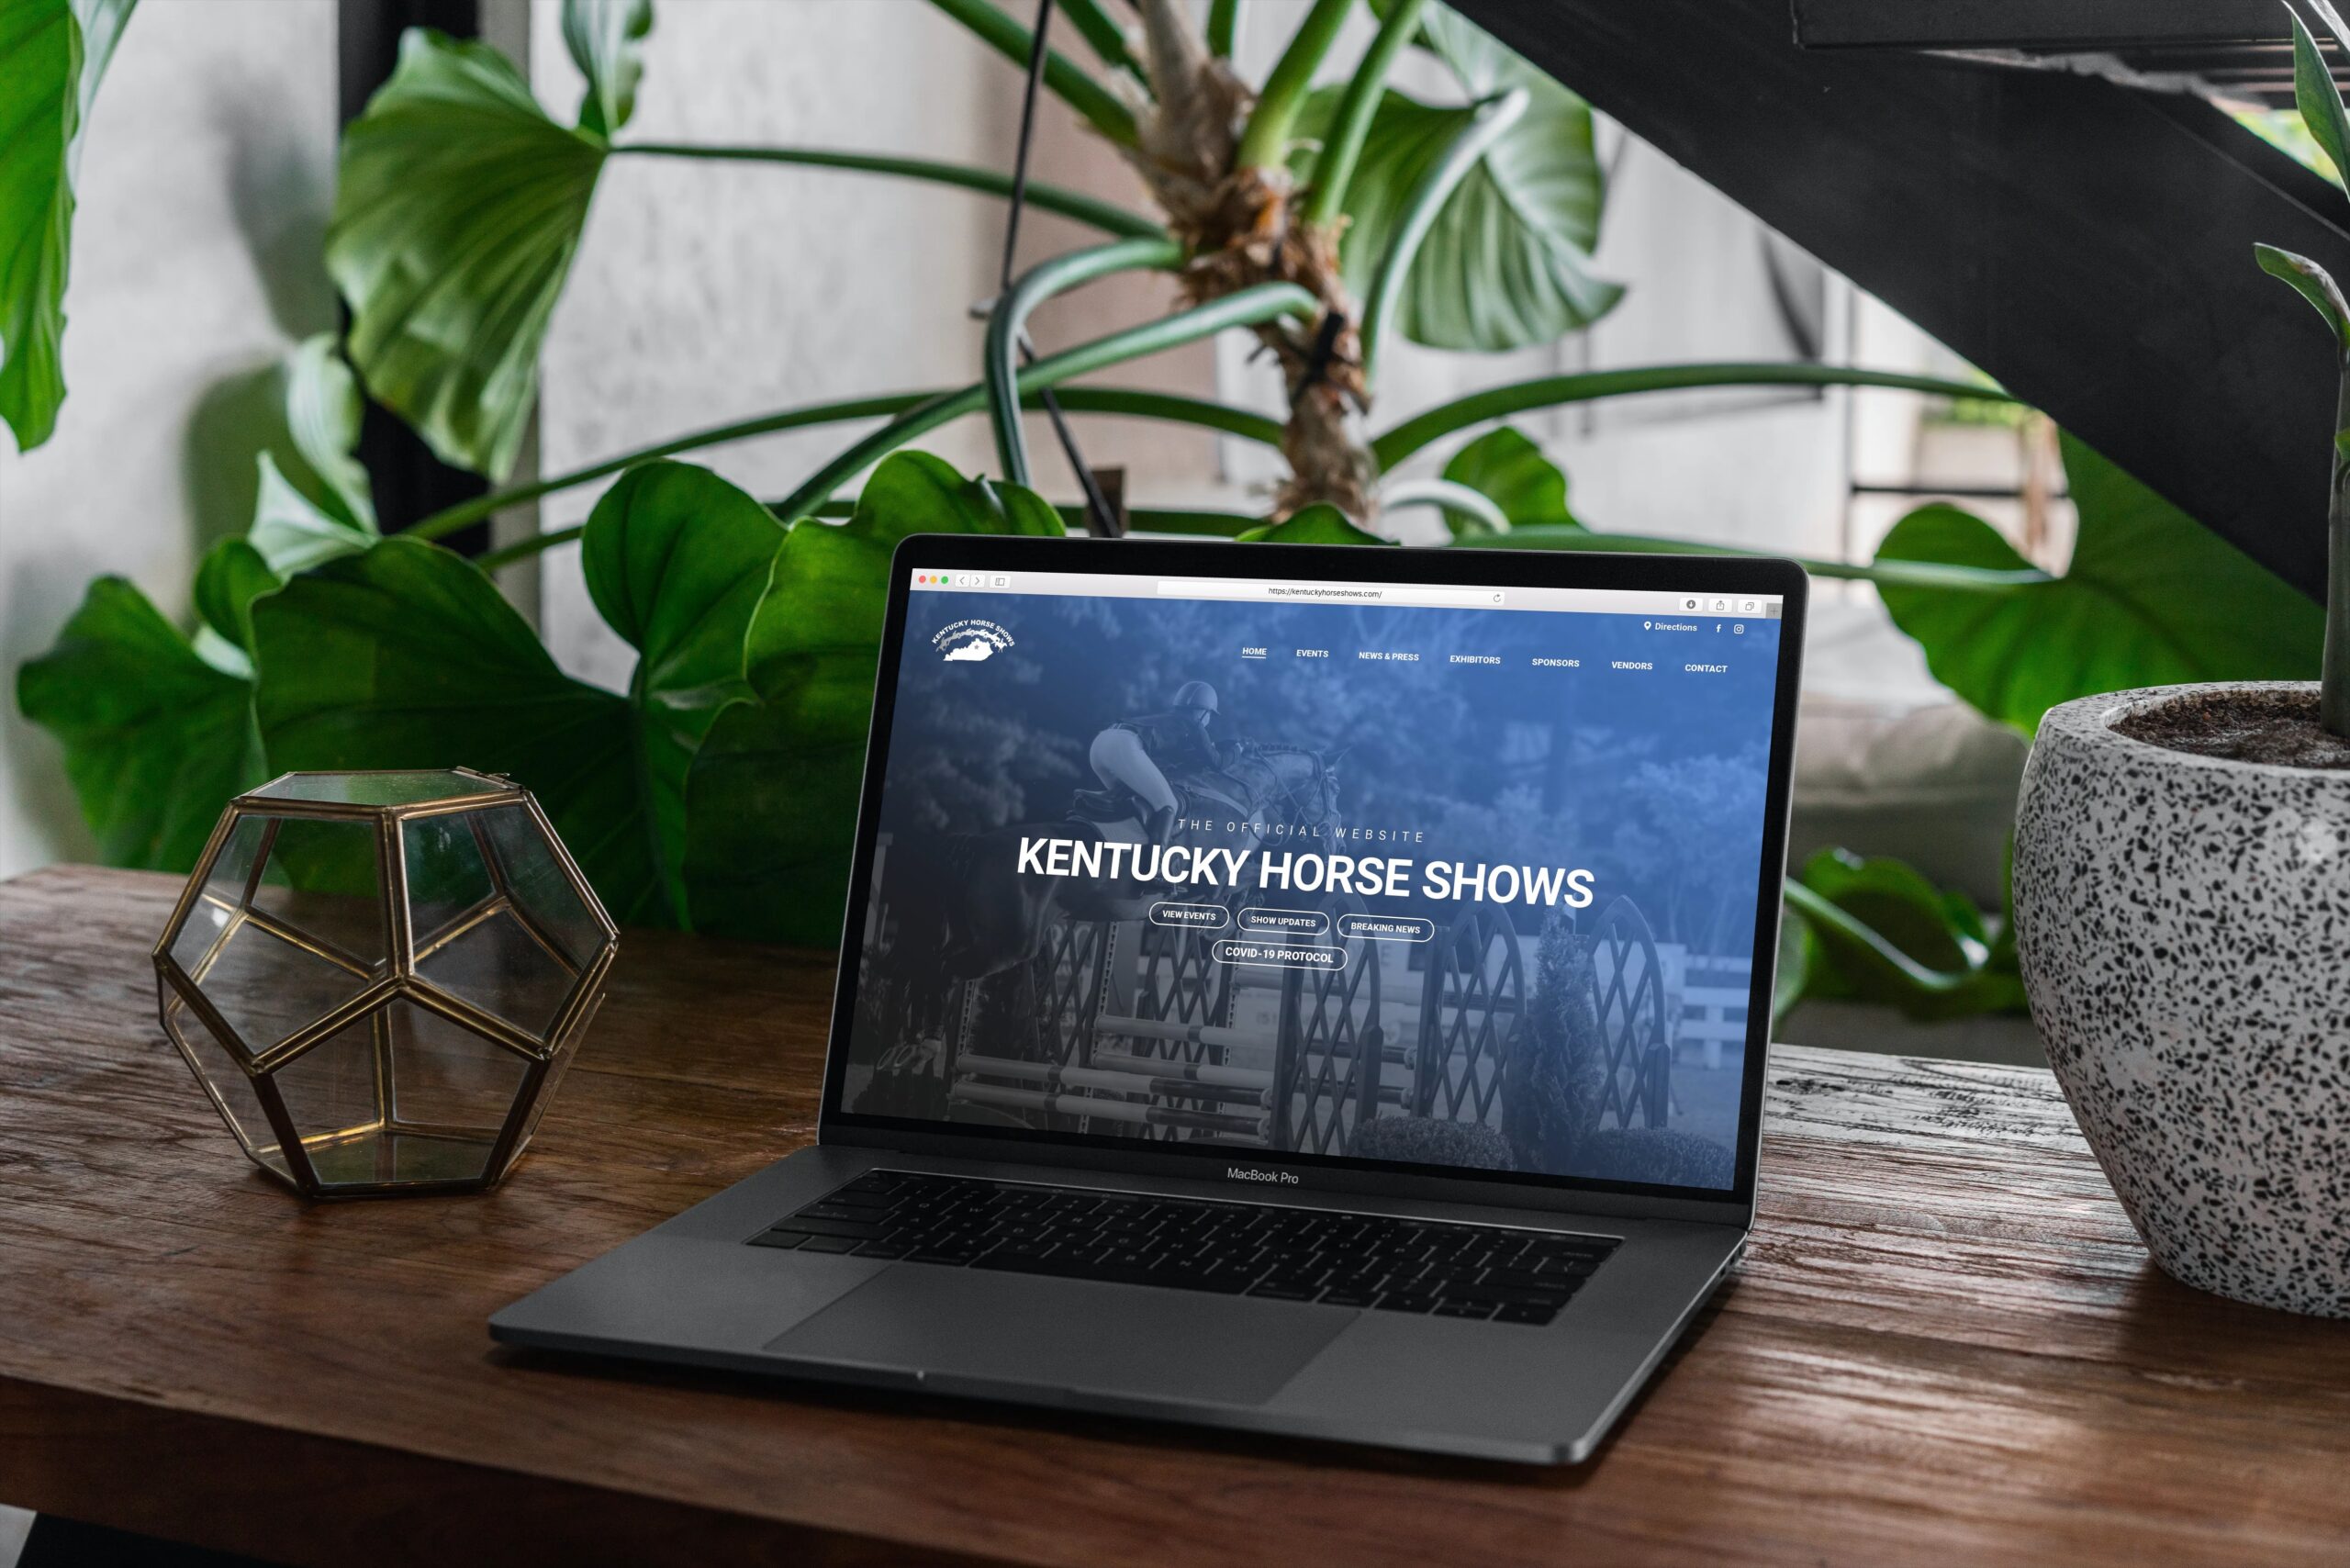 kentucky horse shows website mockup - laptop 2